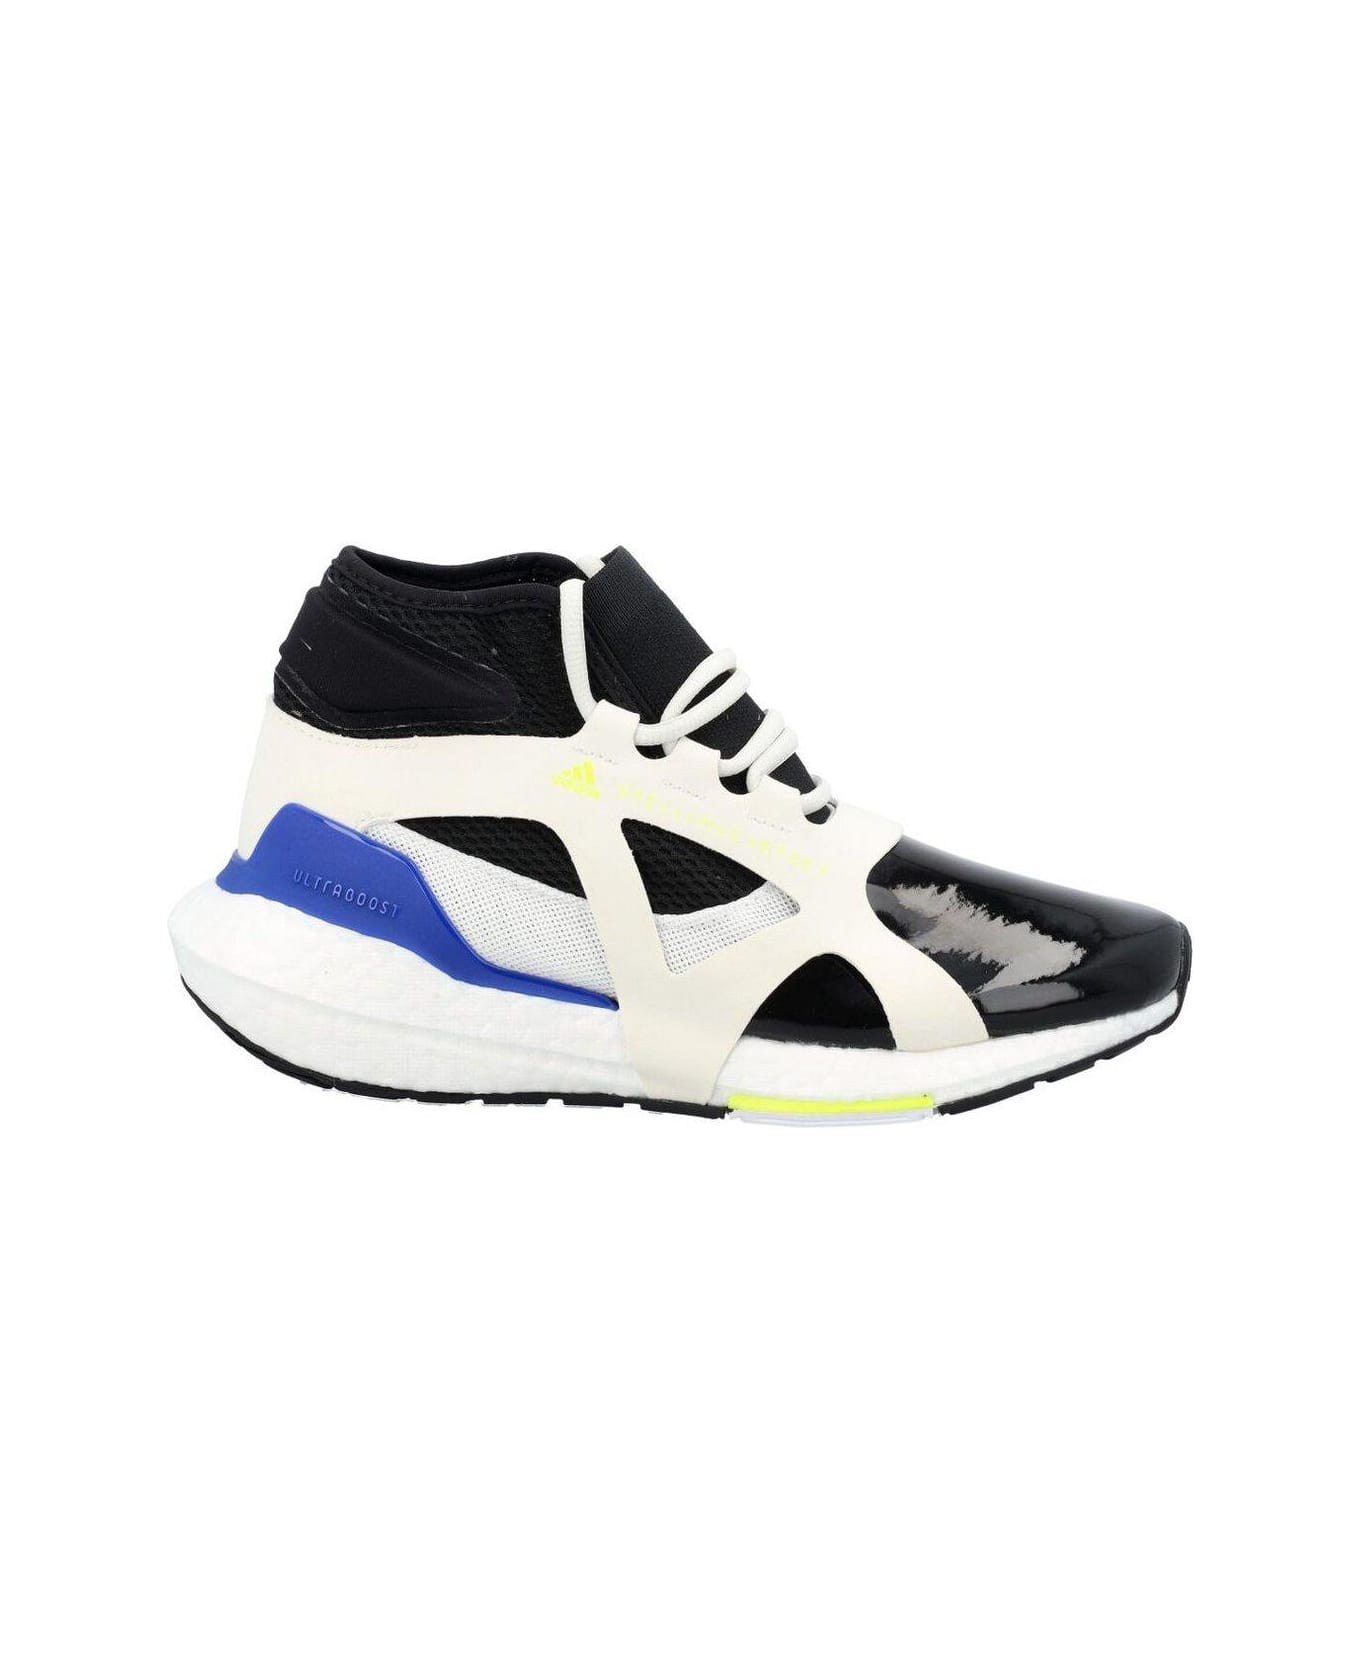 Adidas by Stella McCartney Ultraboost 21 Sneakers - Multiple colors スニーカー